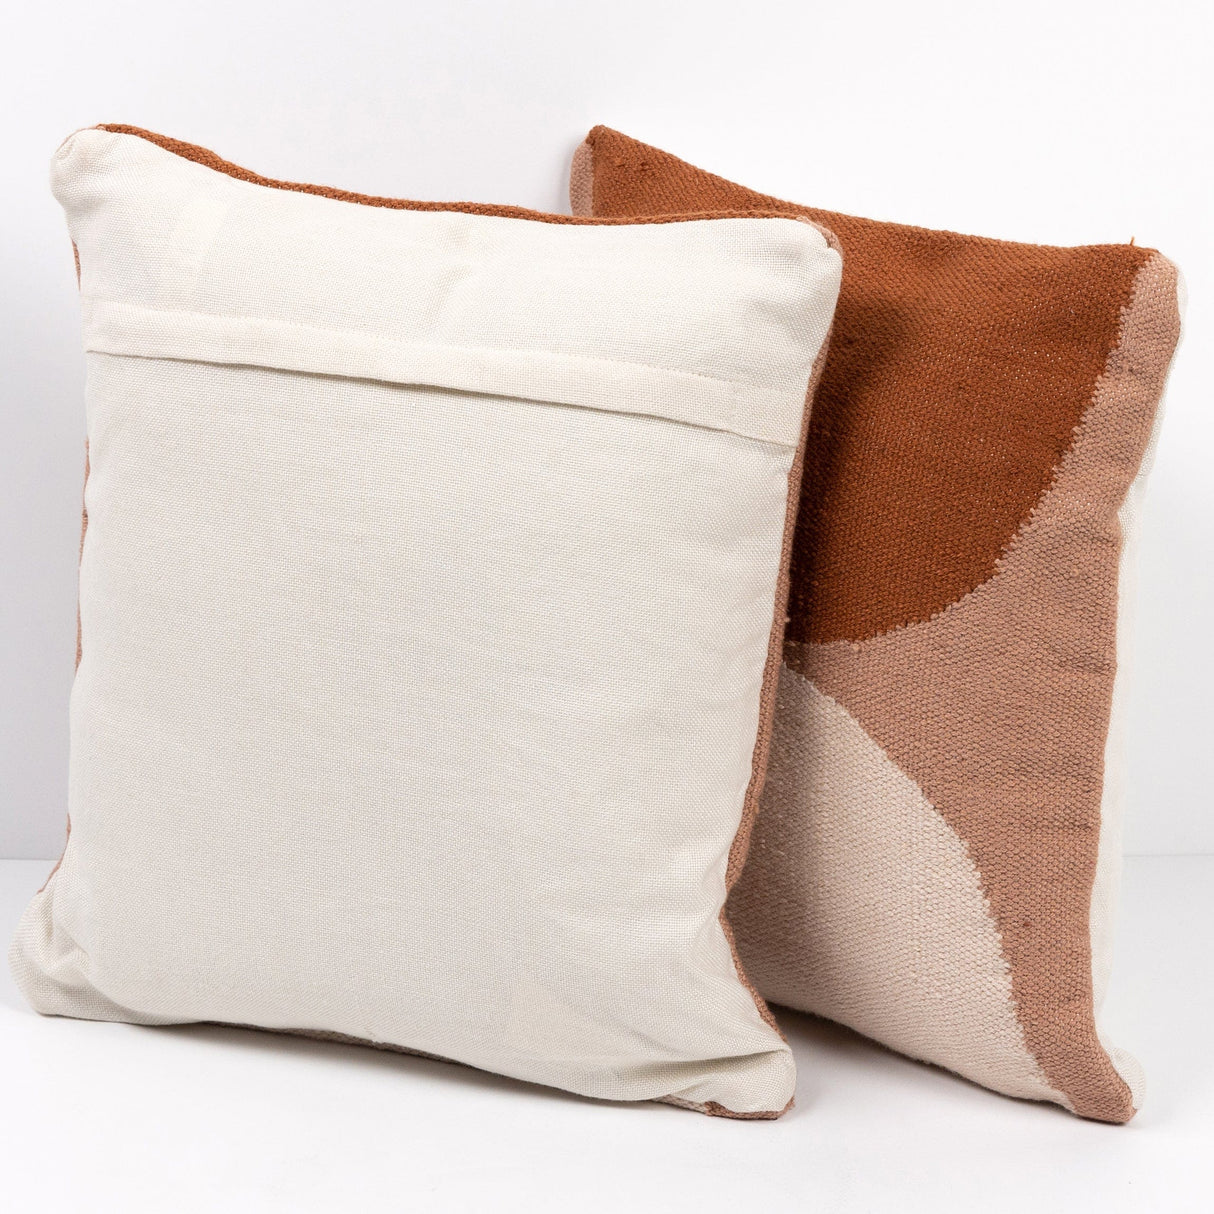 Four Hands Terra Half Circle Outdoor Pillows-Set of 2 Decor four-hands-229349-001